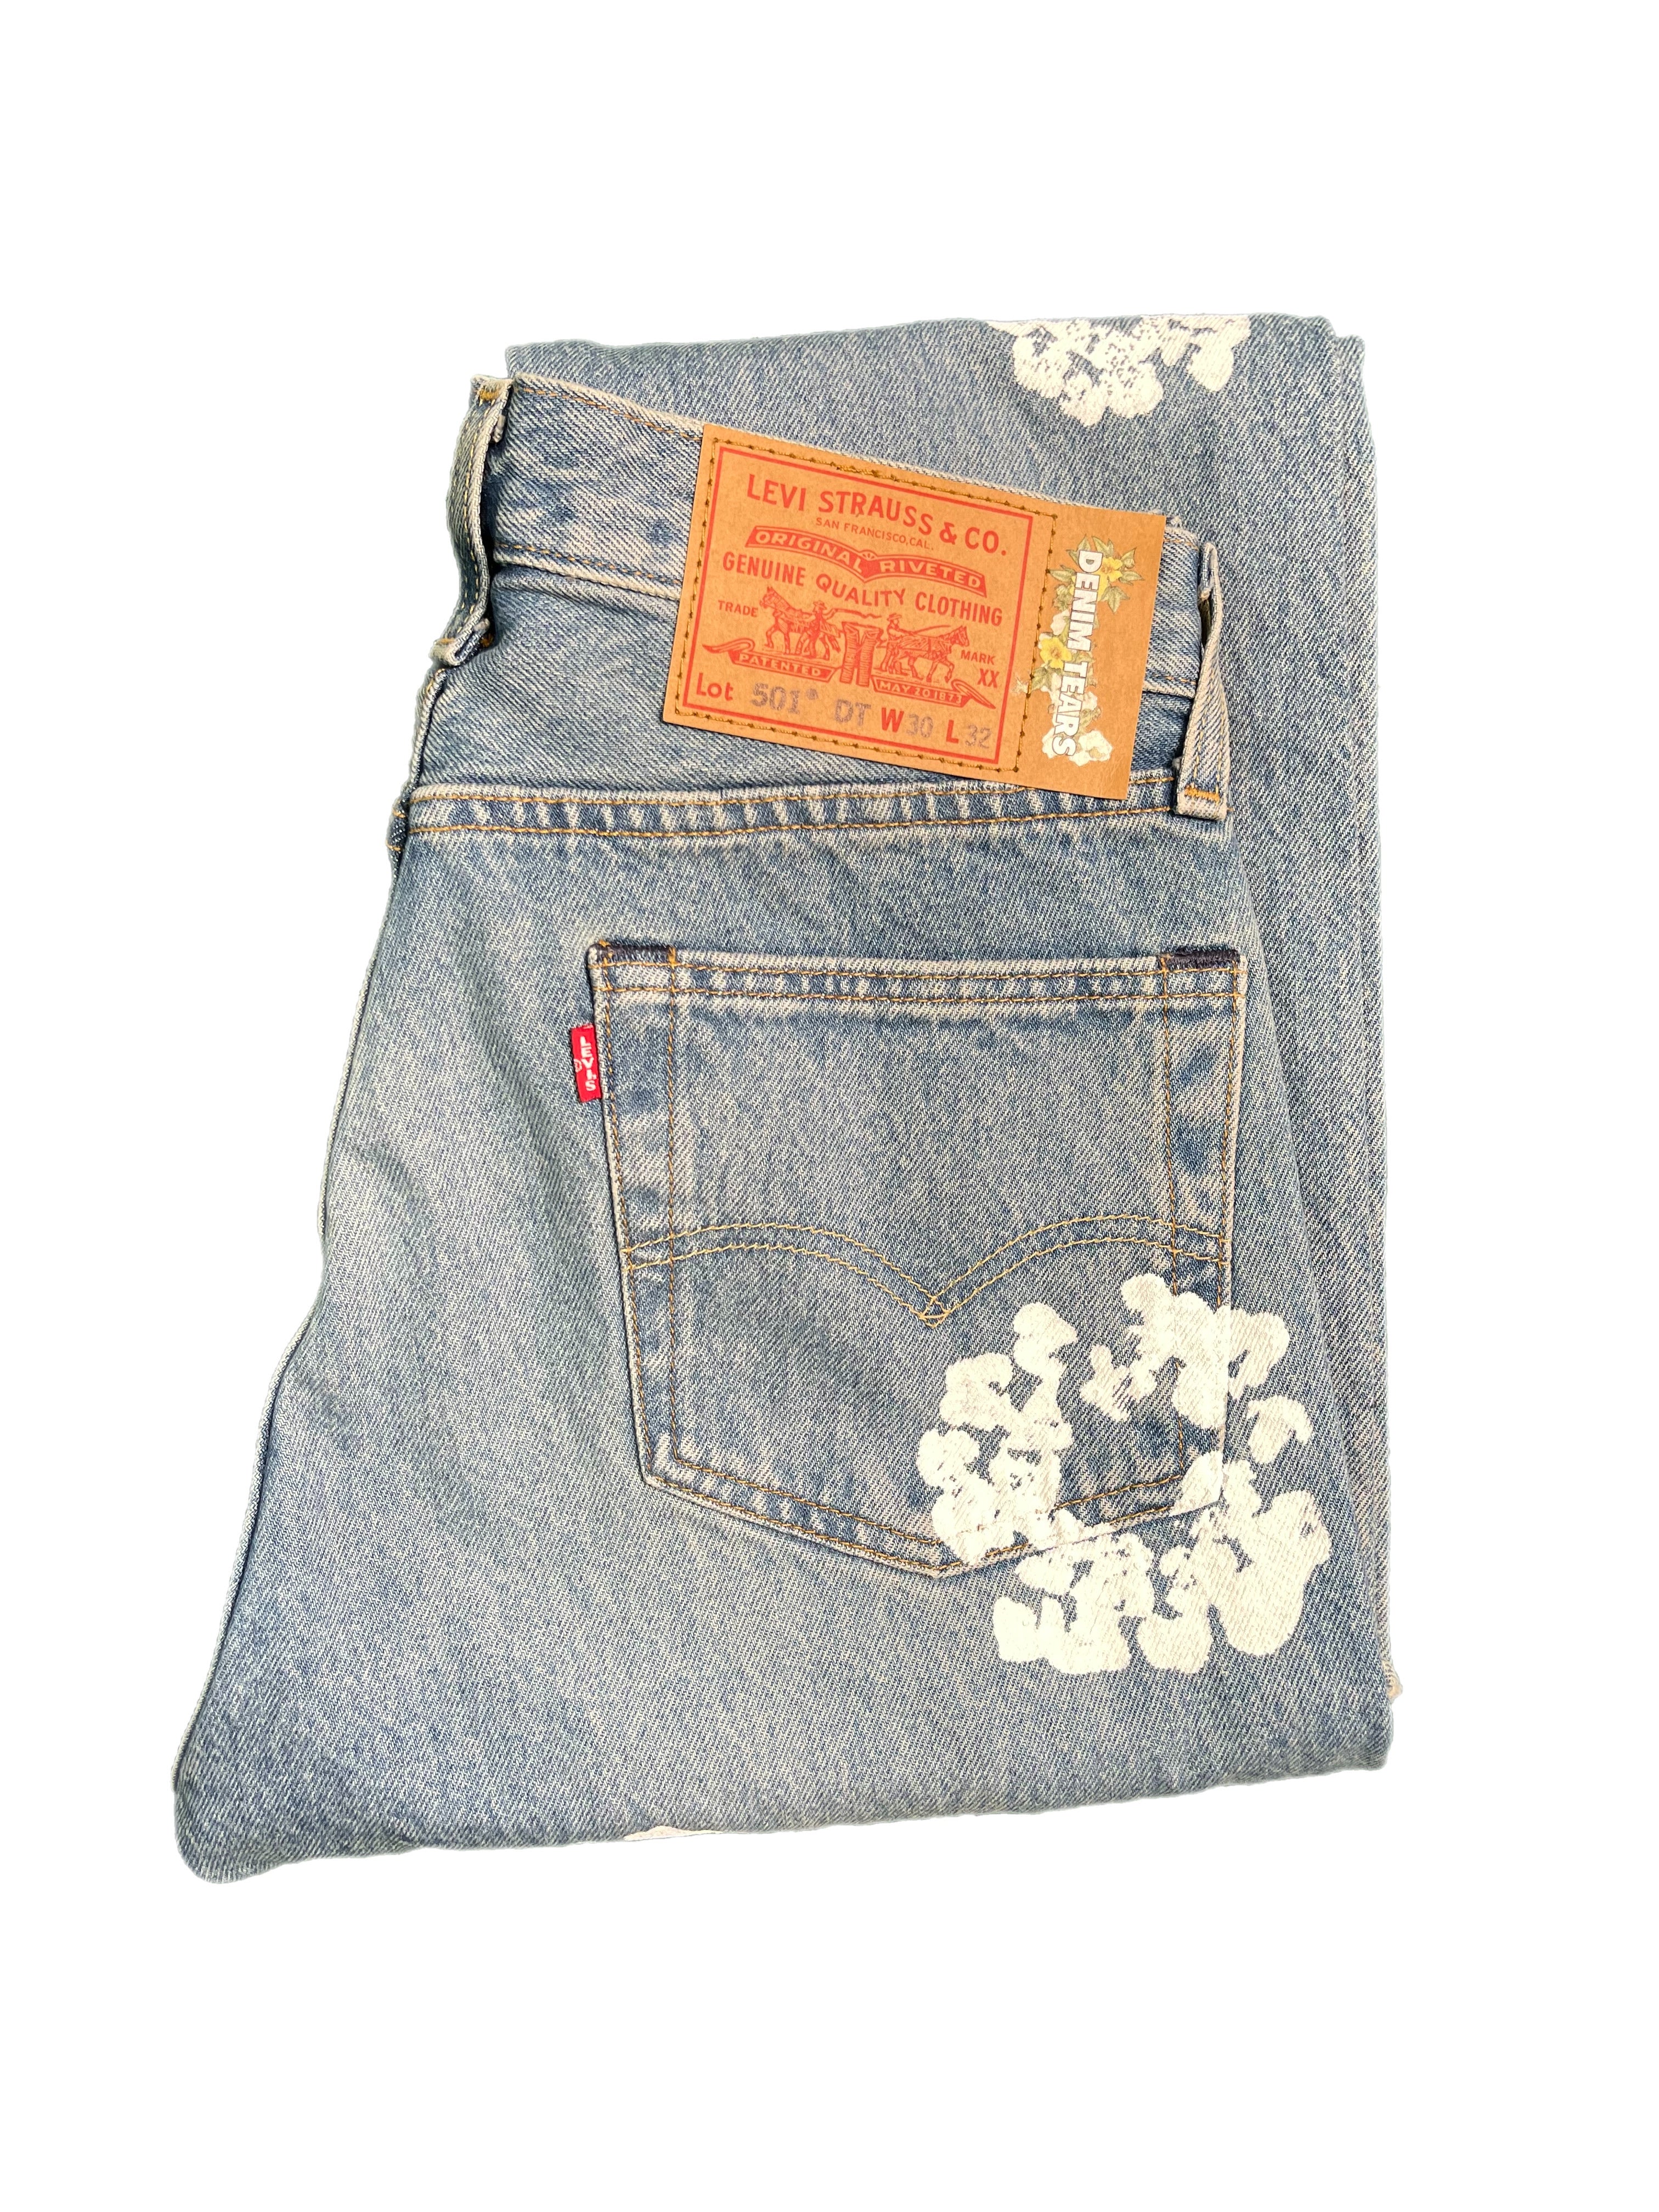 Denim Tears Cotton Wreath Jeans Light Wash – Variety New York